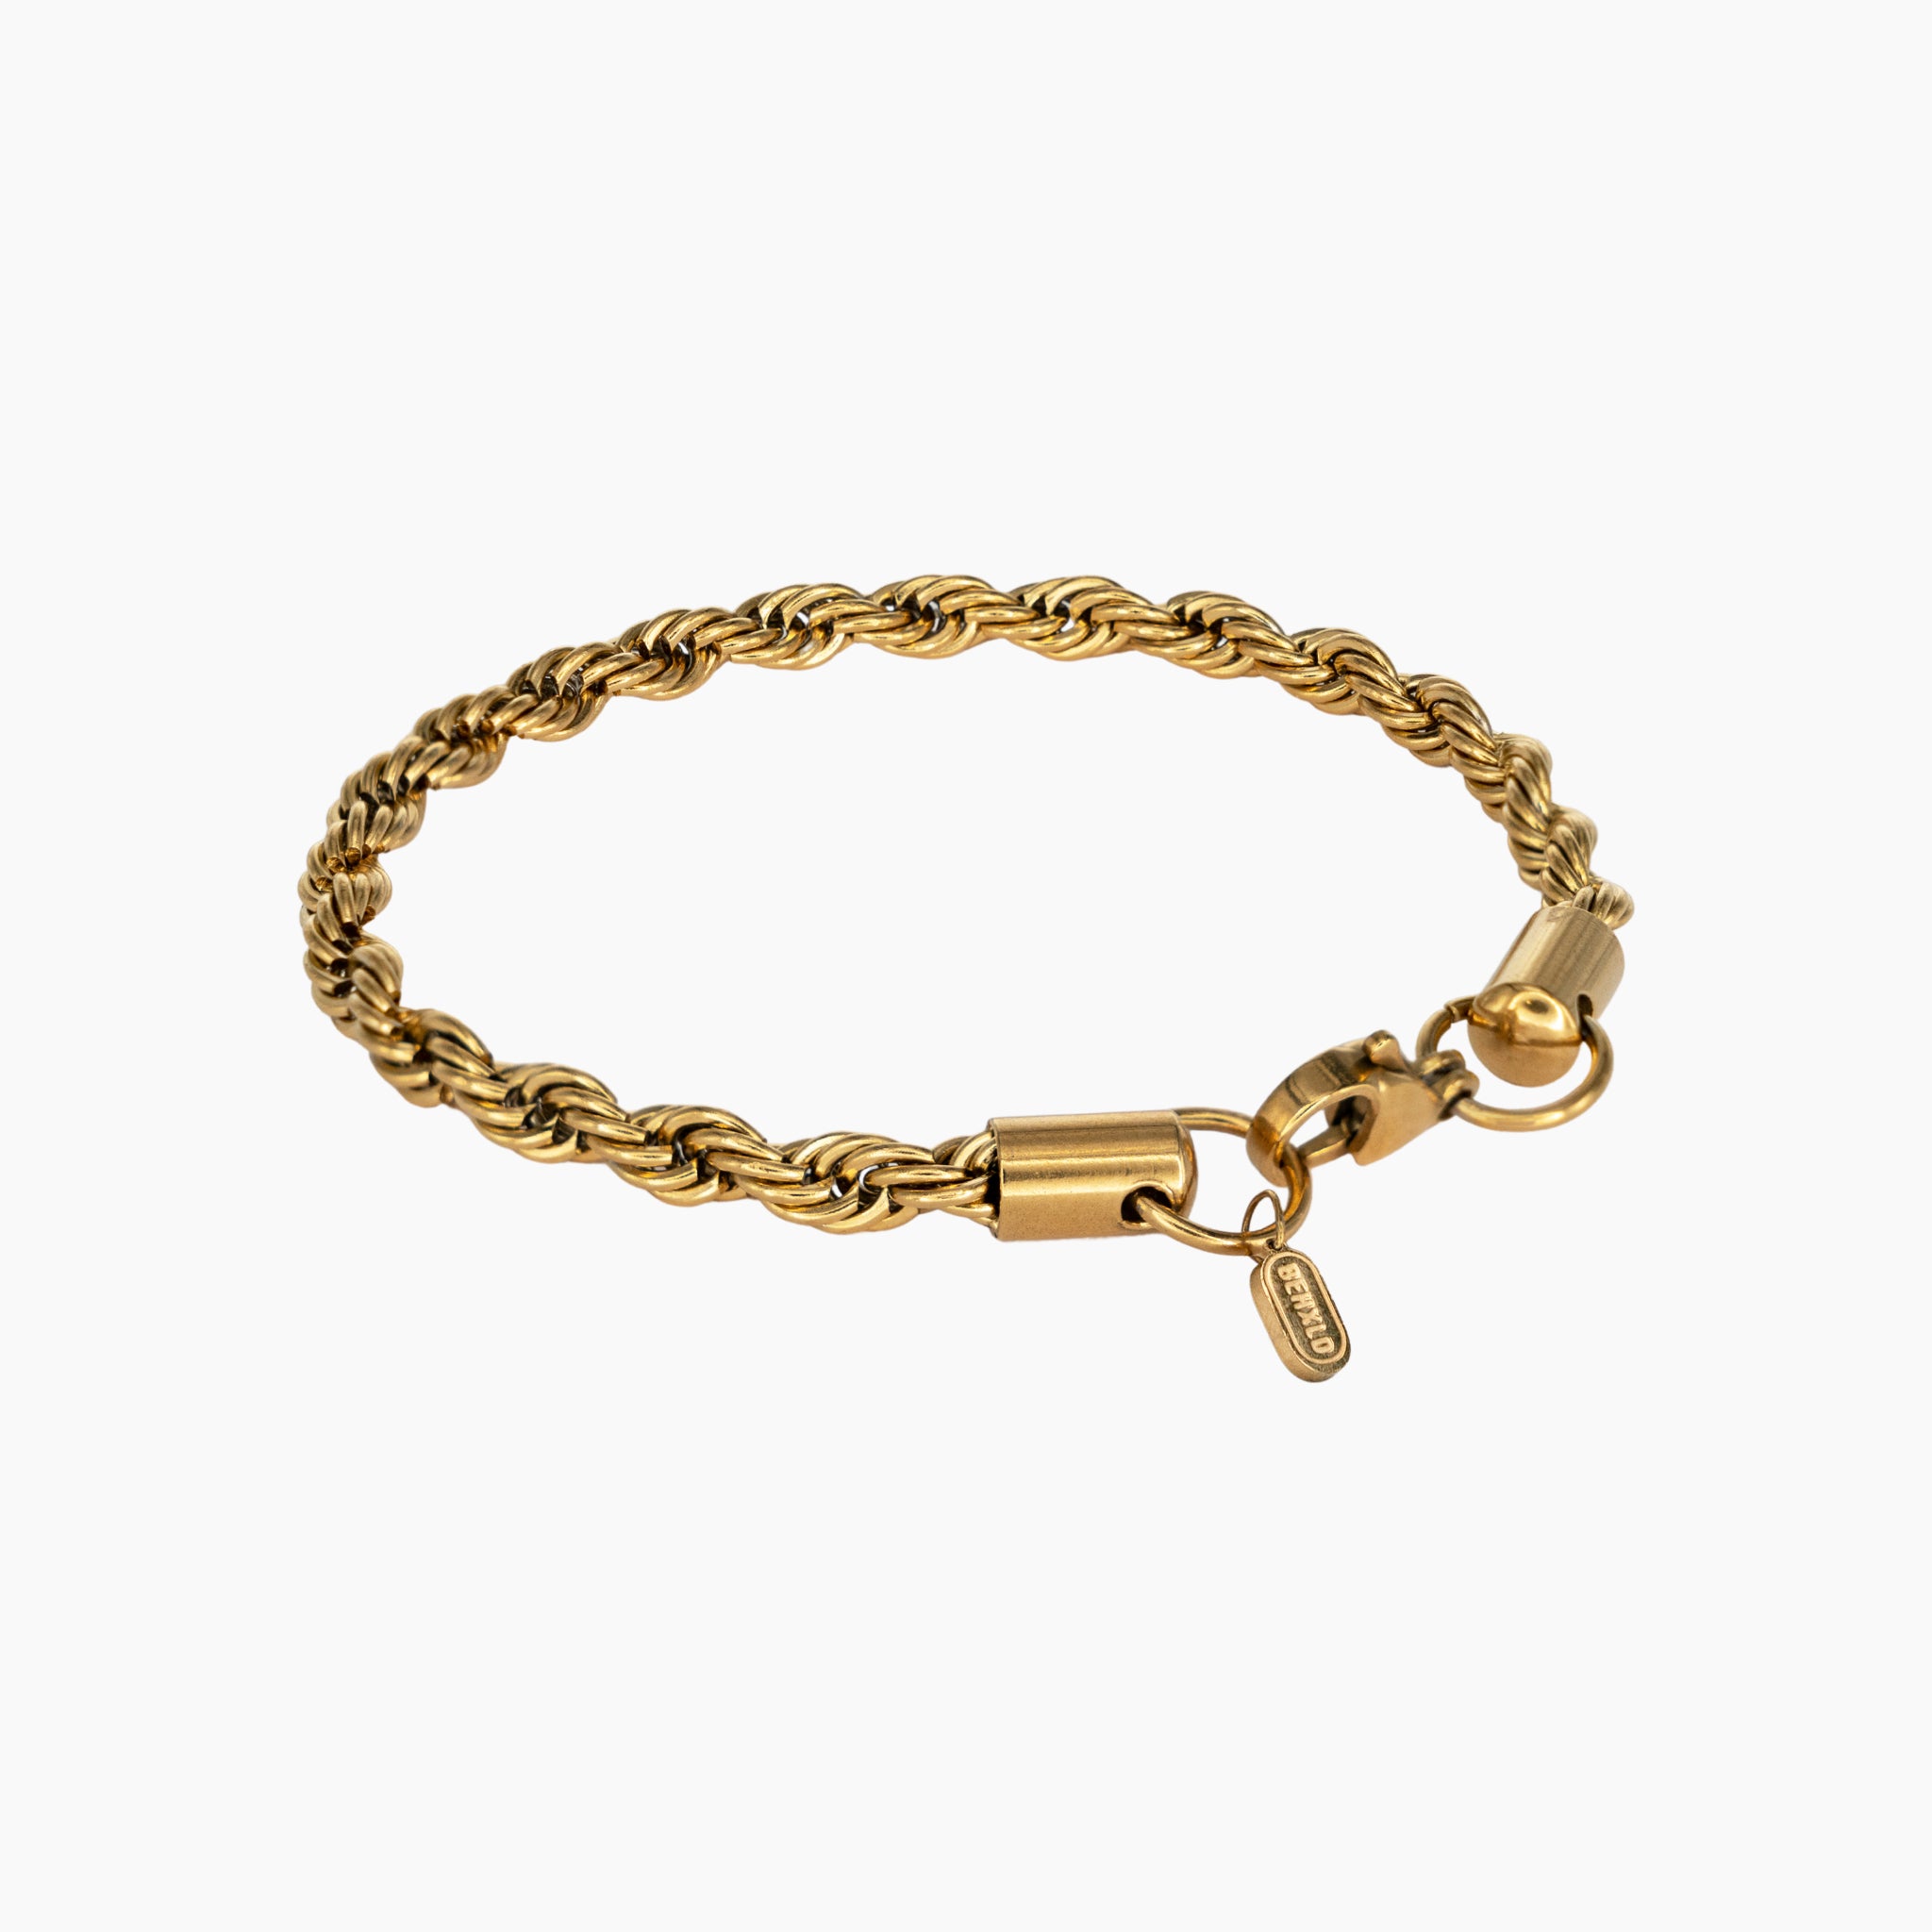 5mm Twisted Rope Bracelet - Gold